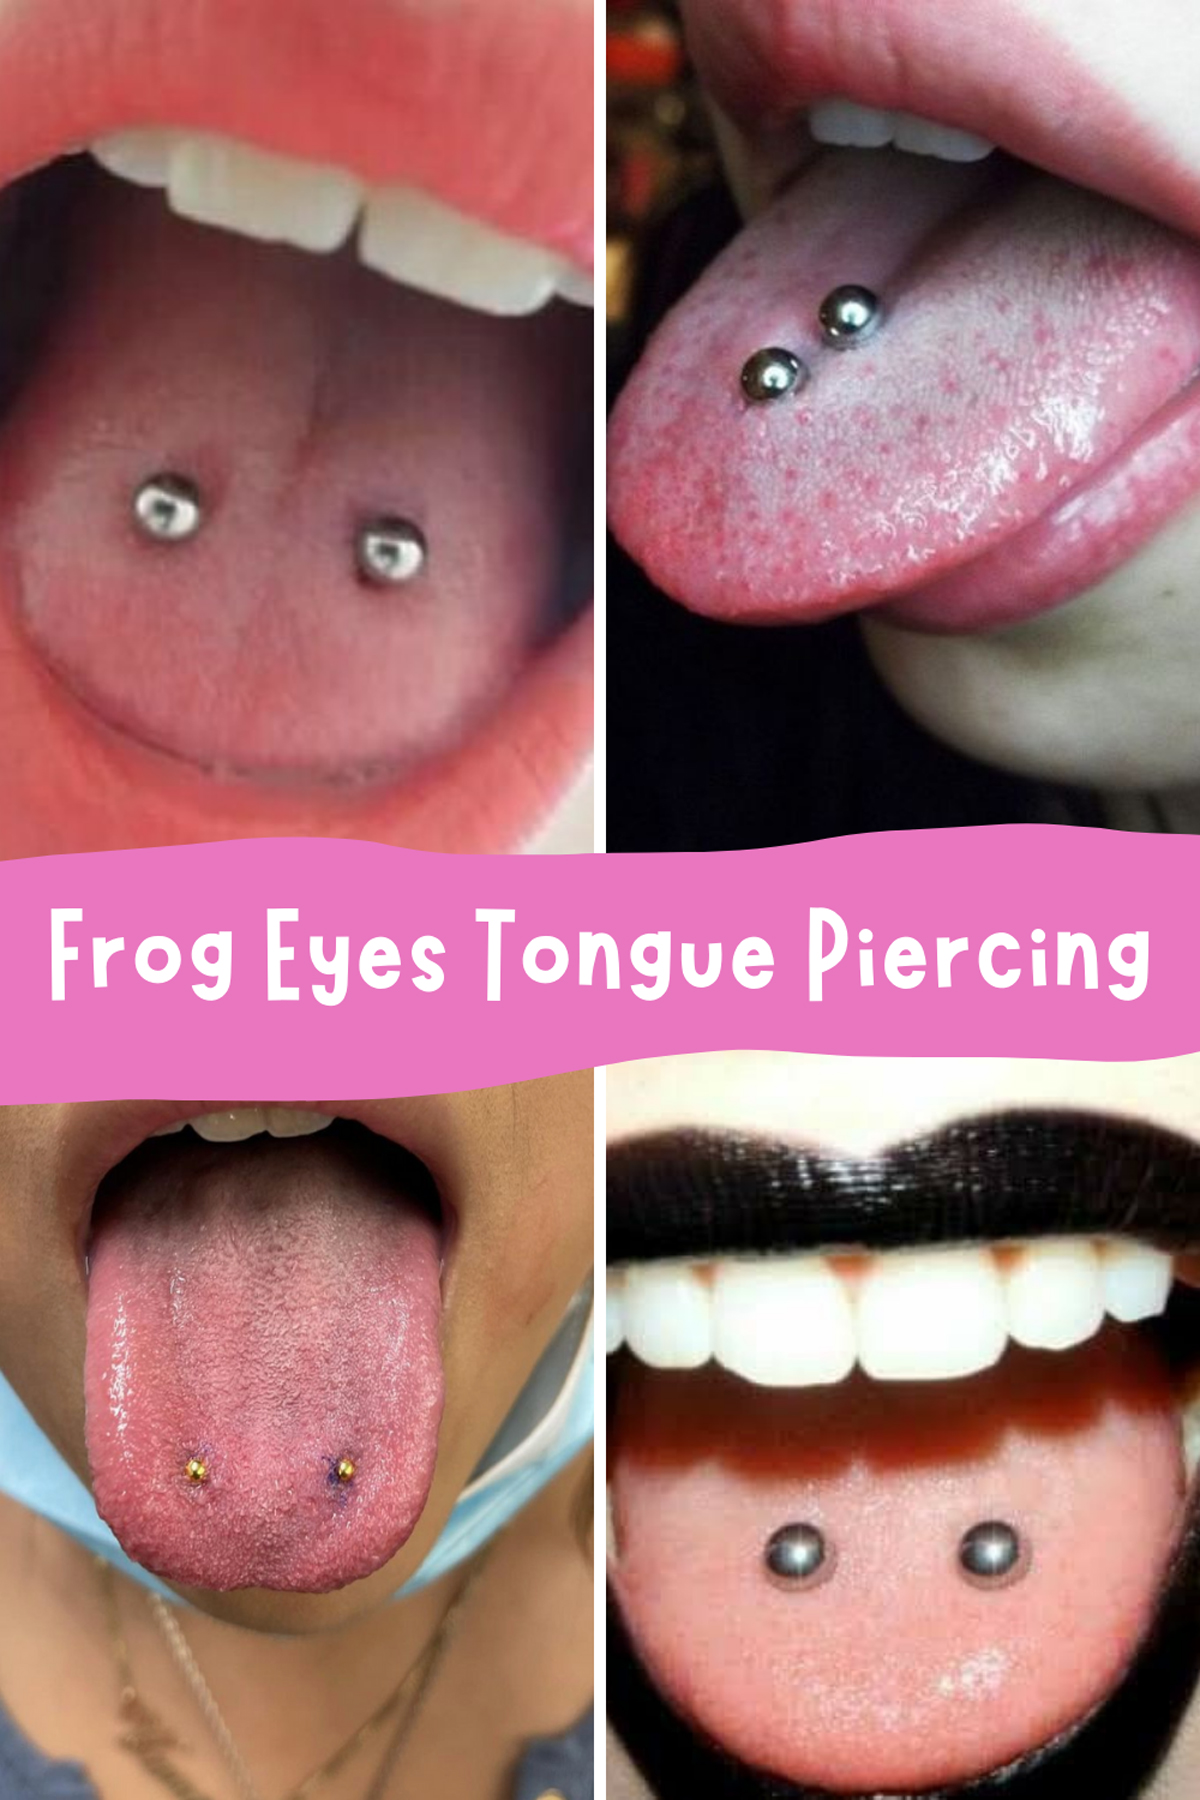 Double Tongue Piercings